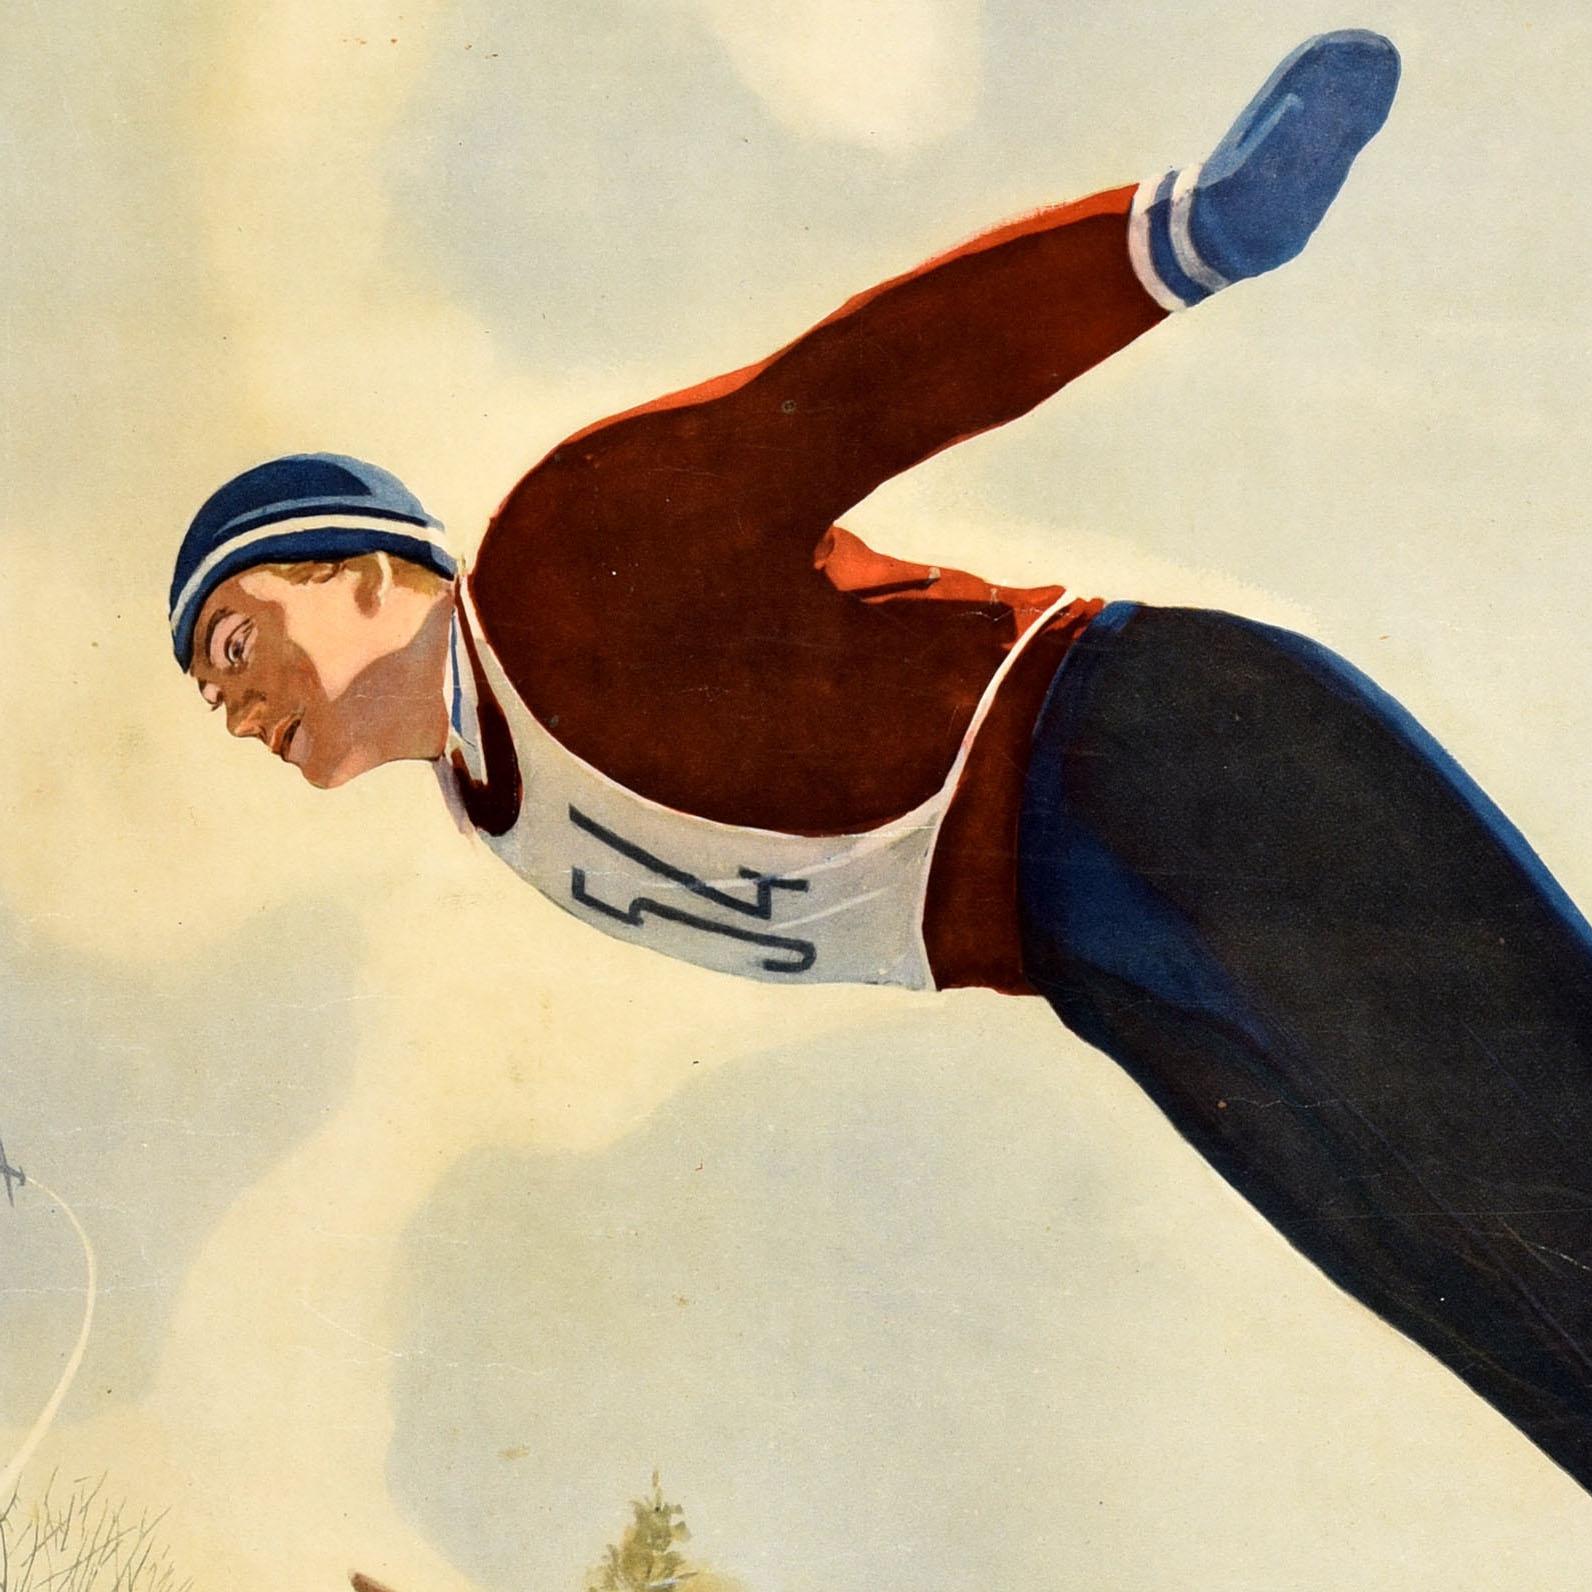 Original Vintage Soviet Sport Poster Skiing Skills Winter Sports USSR Midcentury - Print by Unknown